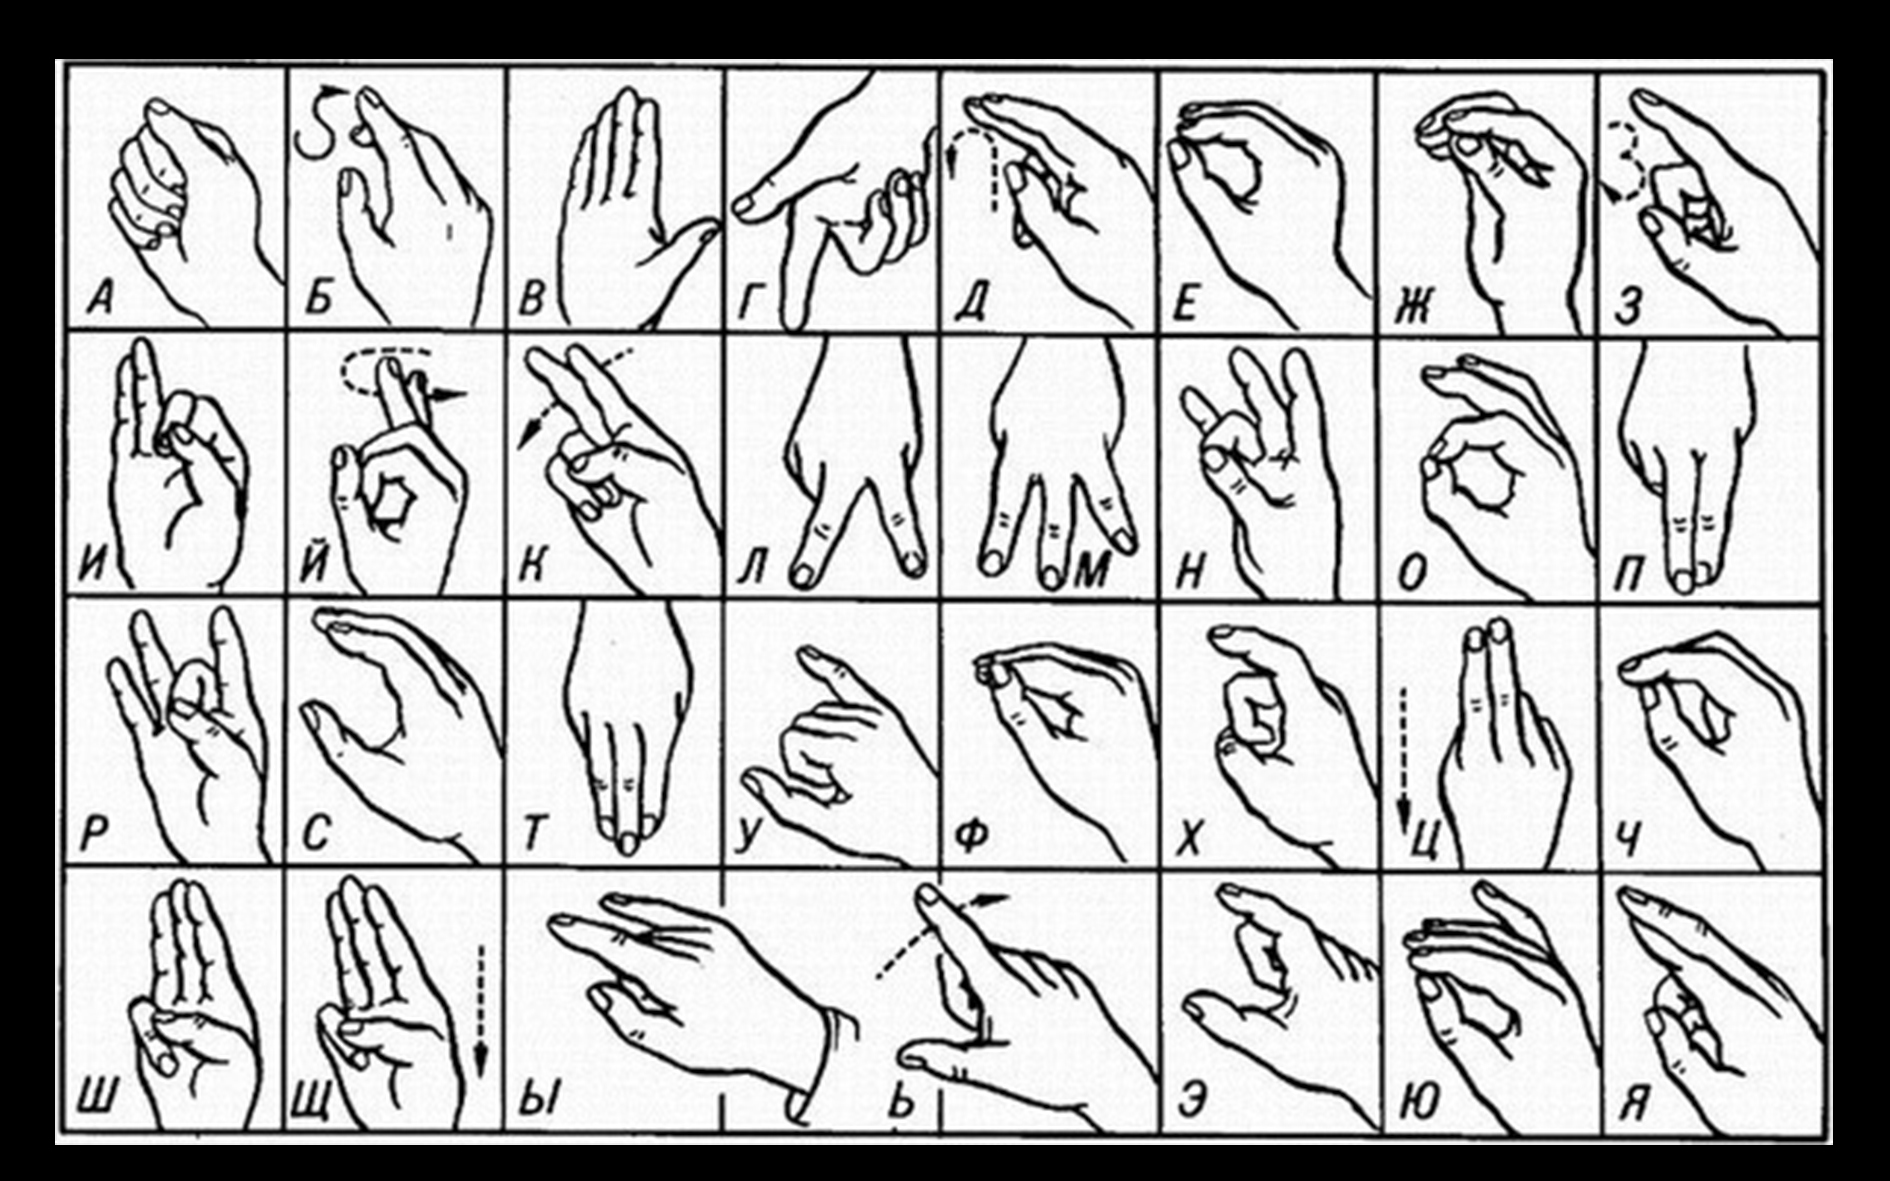 Алфавит глухих букв. Дактильная русская (ручная) Азбука глухих. Азбука жестового языка для глухонемых. Дактиль язык жестов алфавит. Дактиль Азбука для глухих.